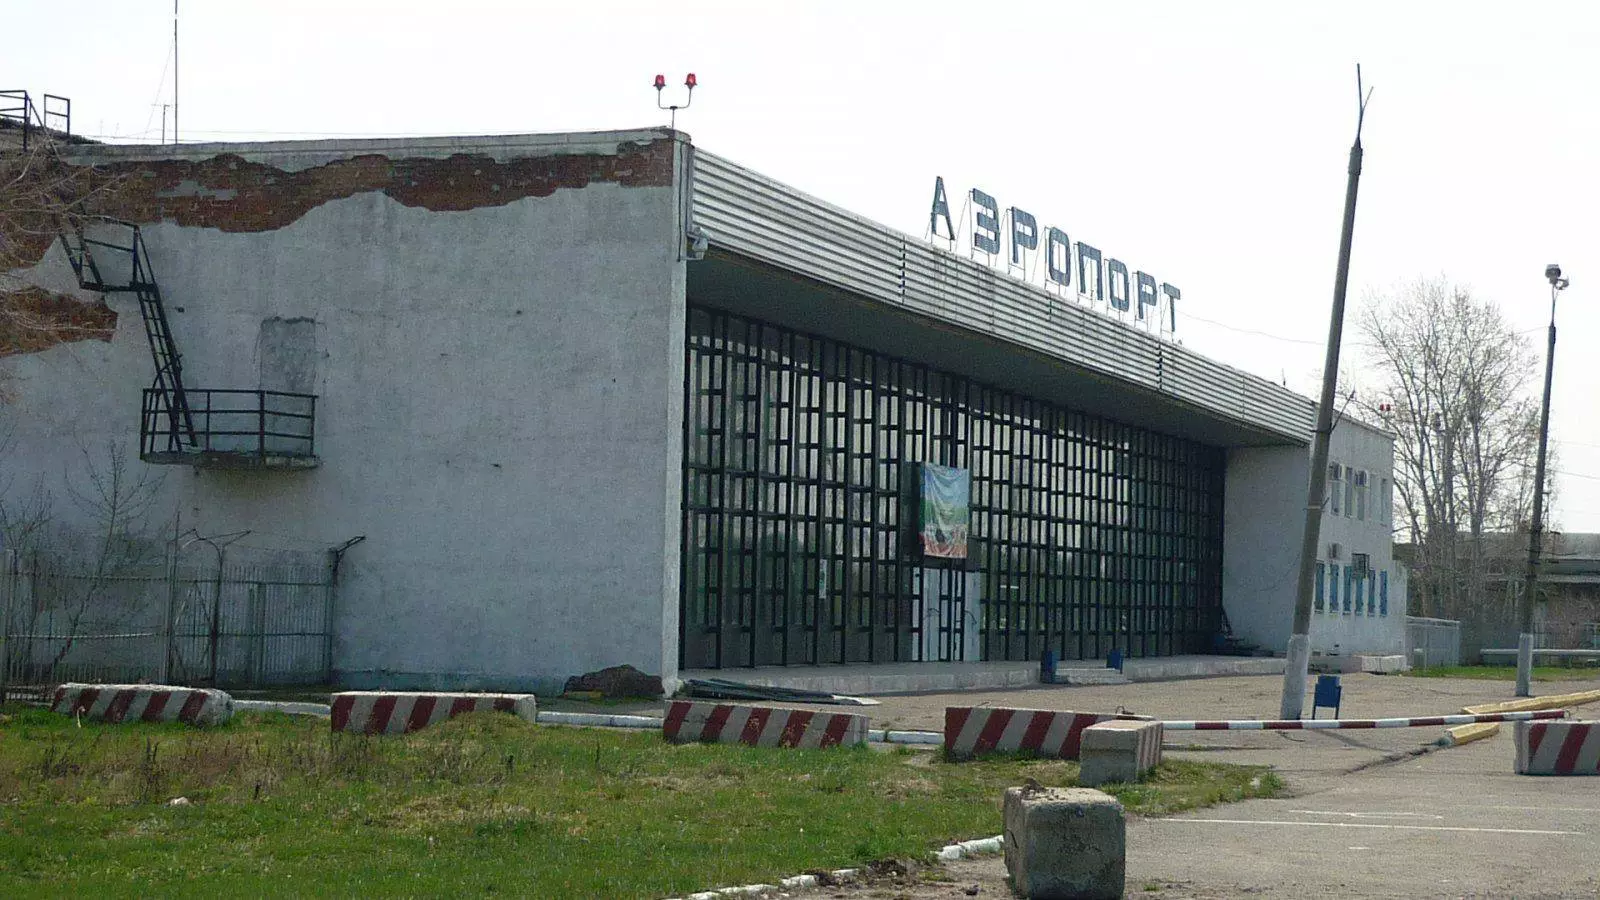 Аэропорт хурба комсомольск-на-амуре komsomolsk-on-amur hurba airport. официальный сайт